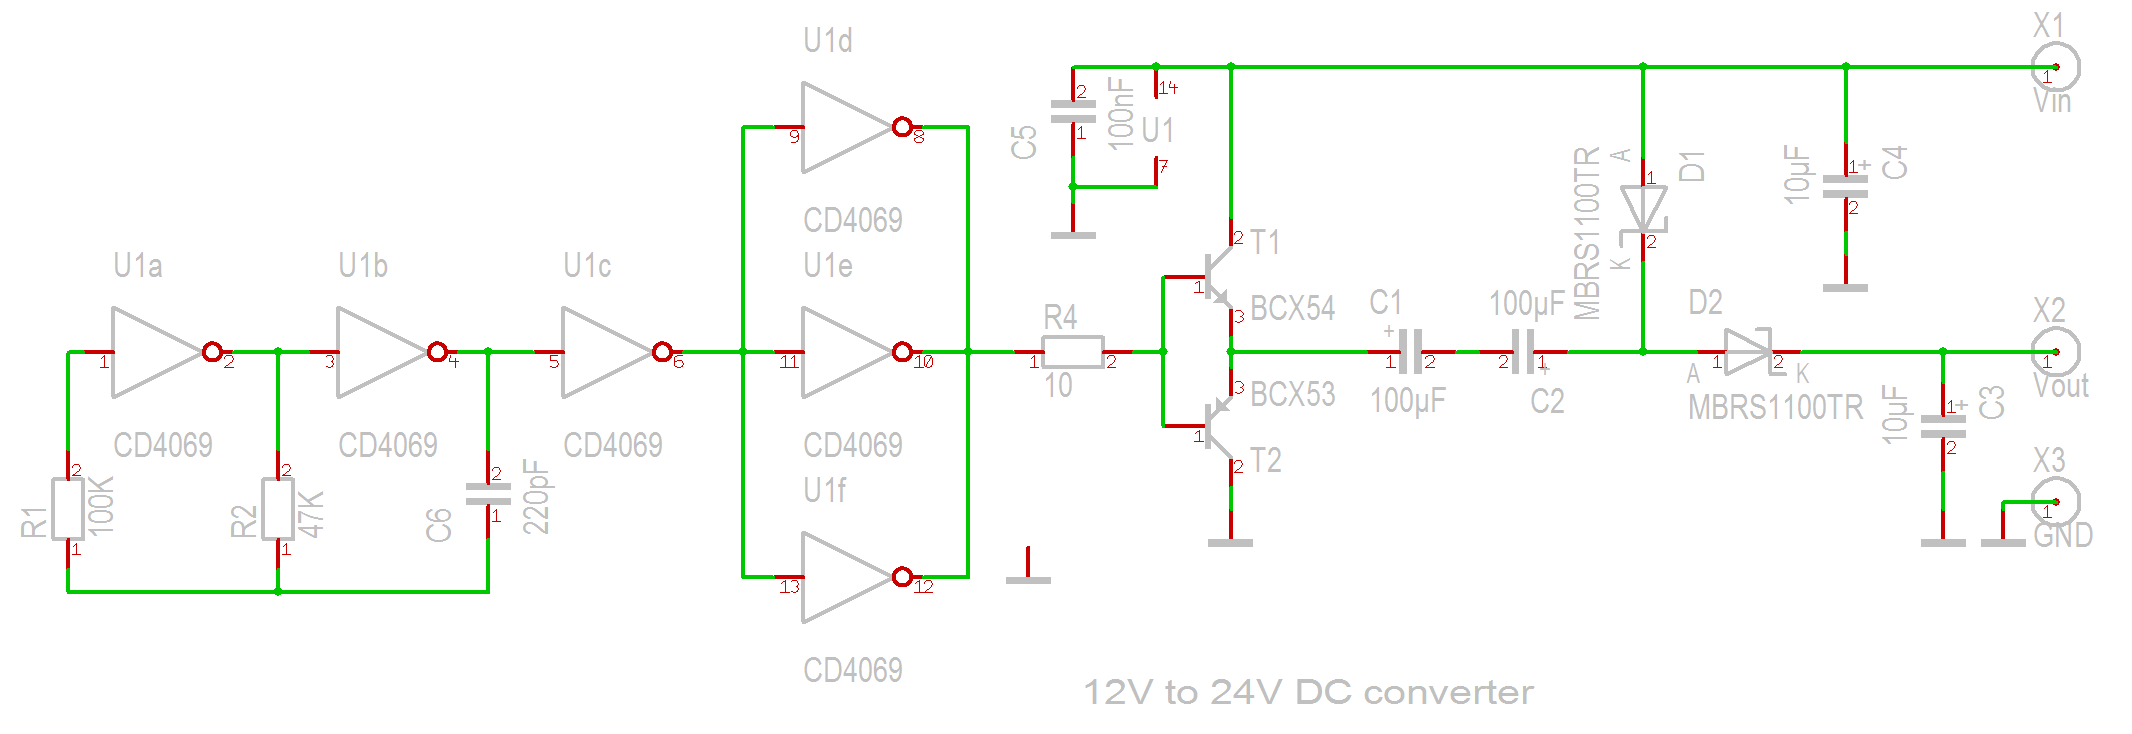 12V to 24V DC/DC converter schematic.